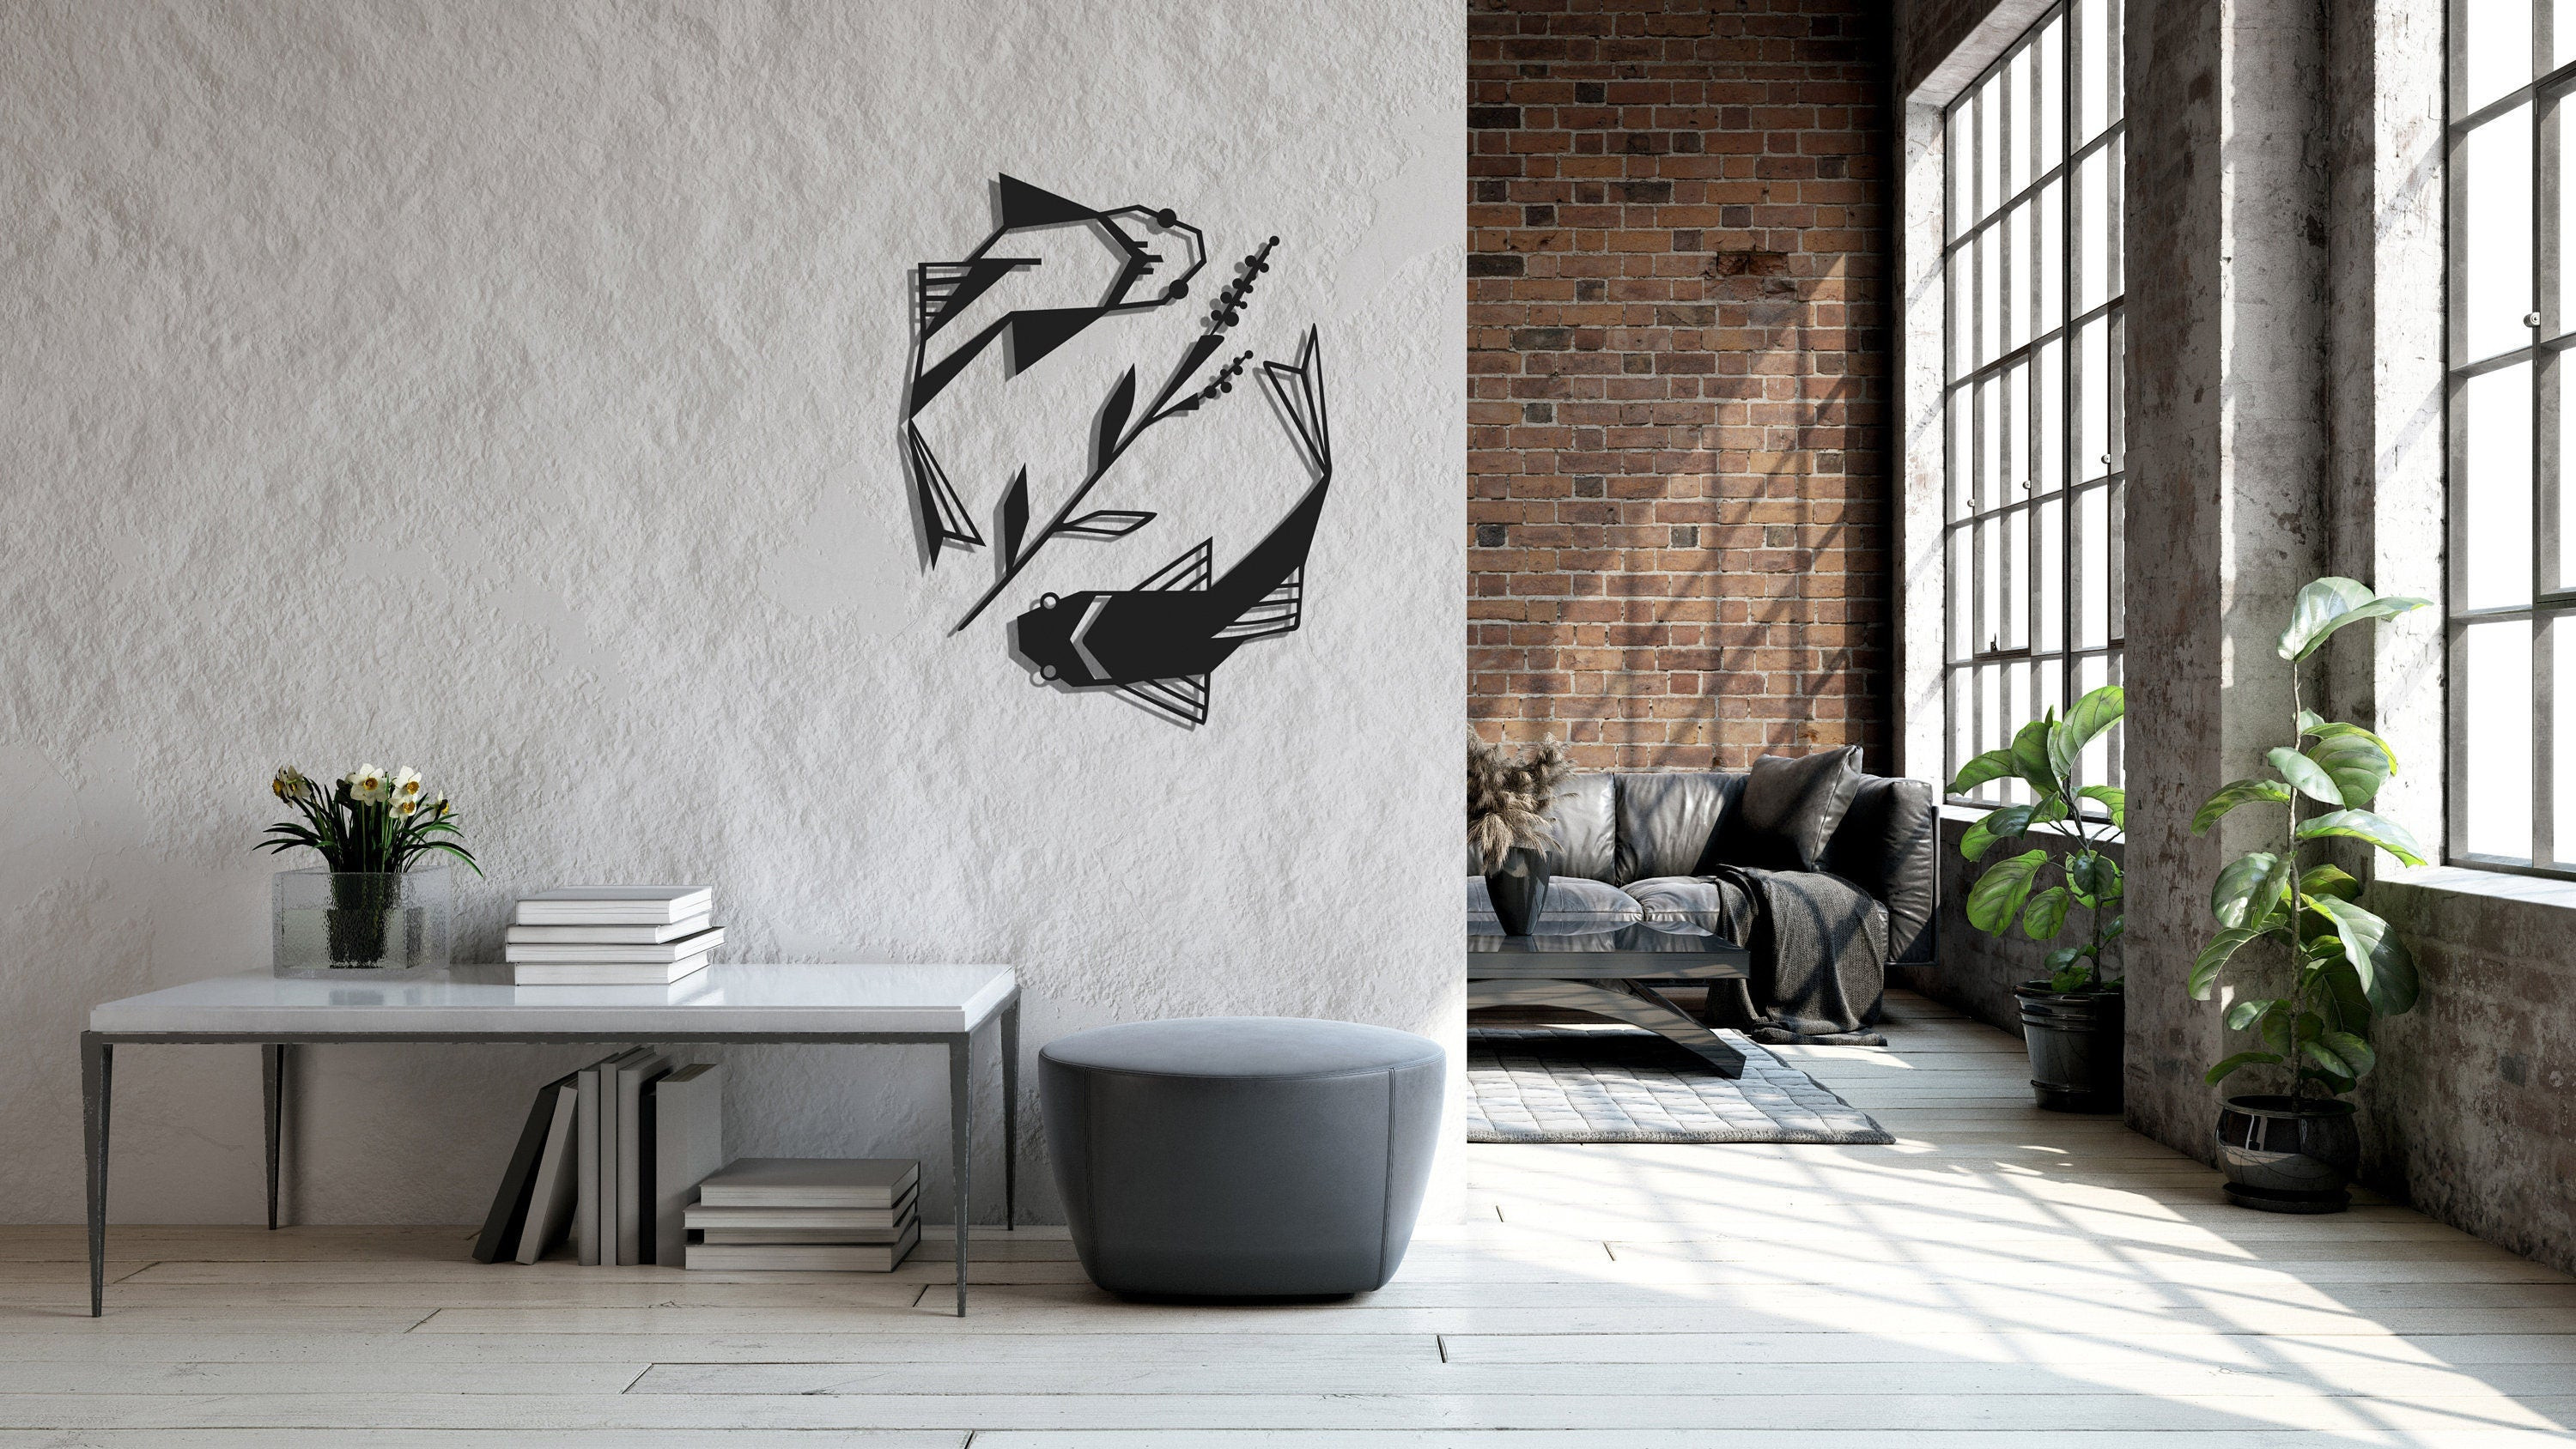 Fish Metal Wall Decor, Yin Yang Metal Wall Art, Housewarming Gift| Office Home Living Room Decor, Outdoor Metal Wall Art, Metal Laser Cut Metal Signs Custom Gift Ideas 12x12IN